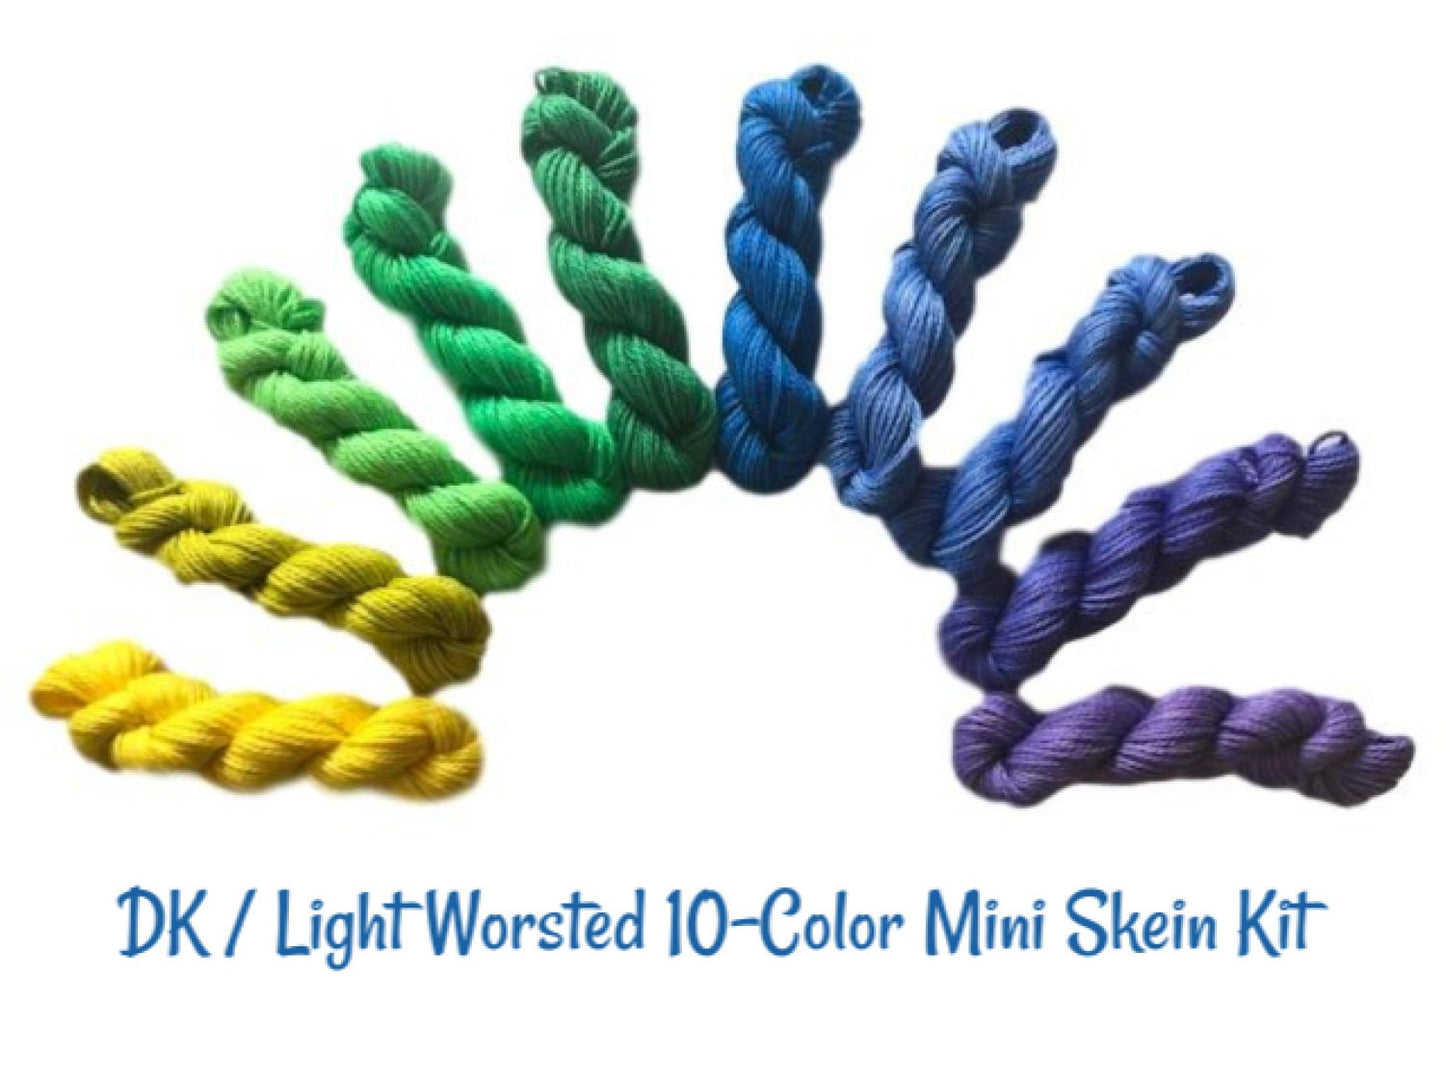 Vegan Yarn Kit - Hand Dyed - DK / Light Worsted - 10 Mini Skeins - Bamboo Cotton Soft Baby Yarn - 3 Ply Artisan Fiber - Semi Solid Gradient